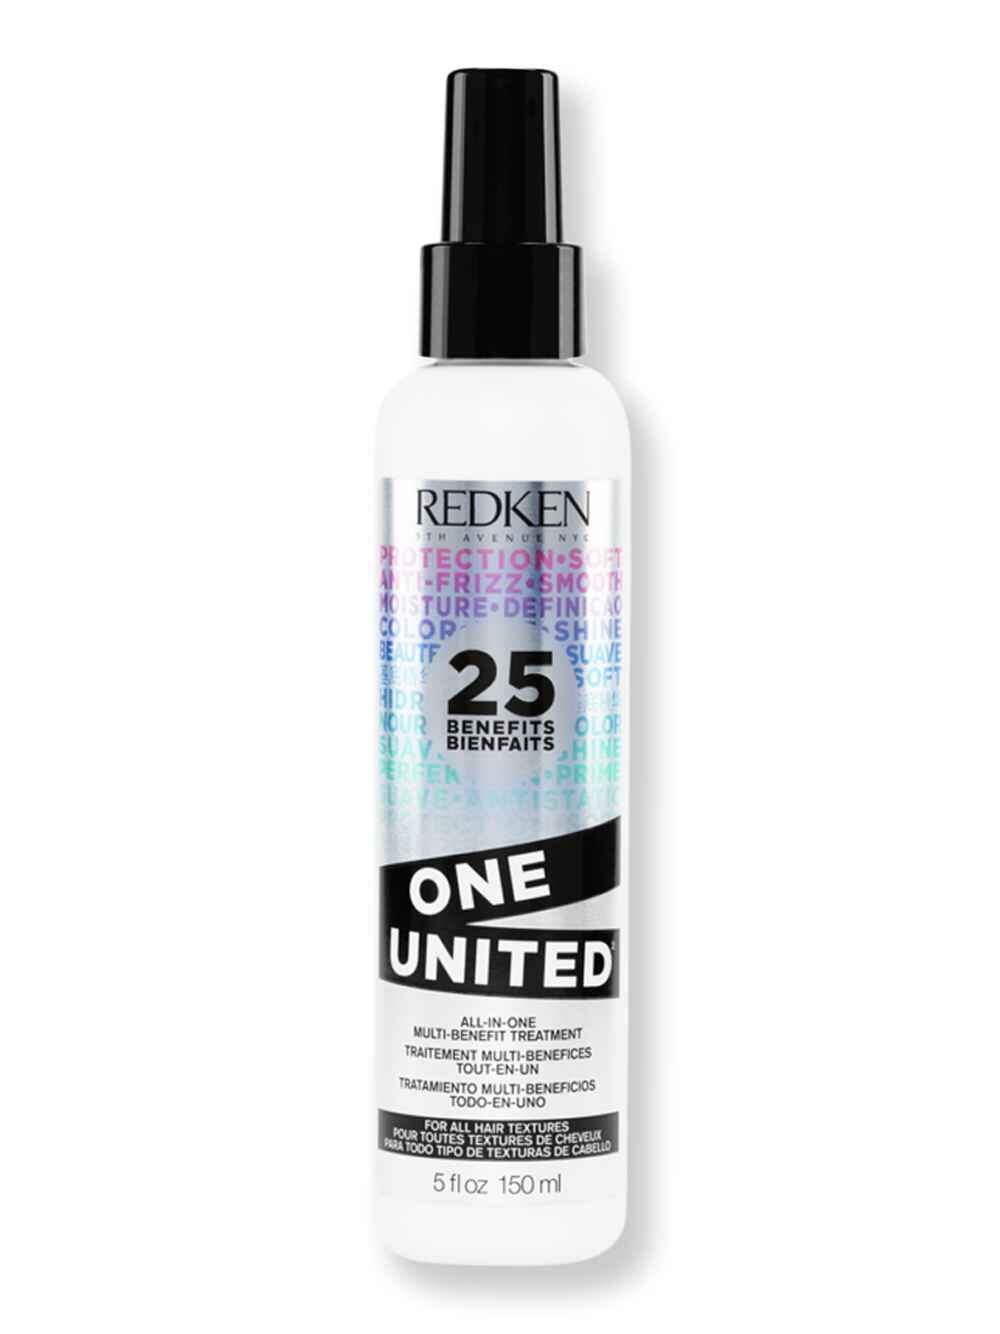 Redken Redken One United All In One Multi-Benefit Treatment 5 oz150 ml Hair & Scalp Repair 